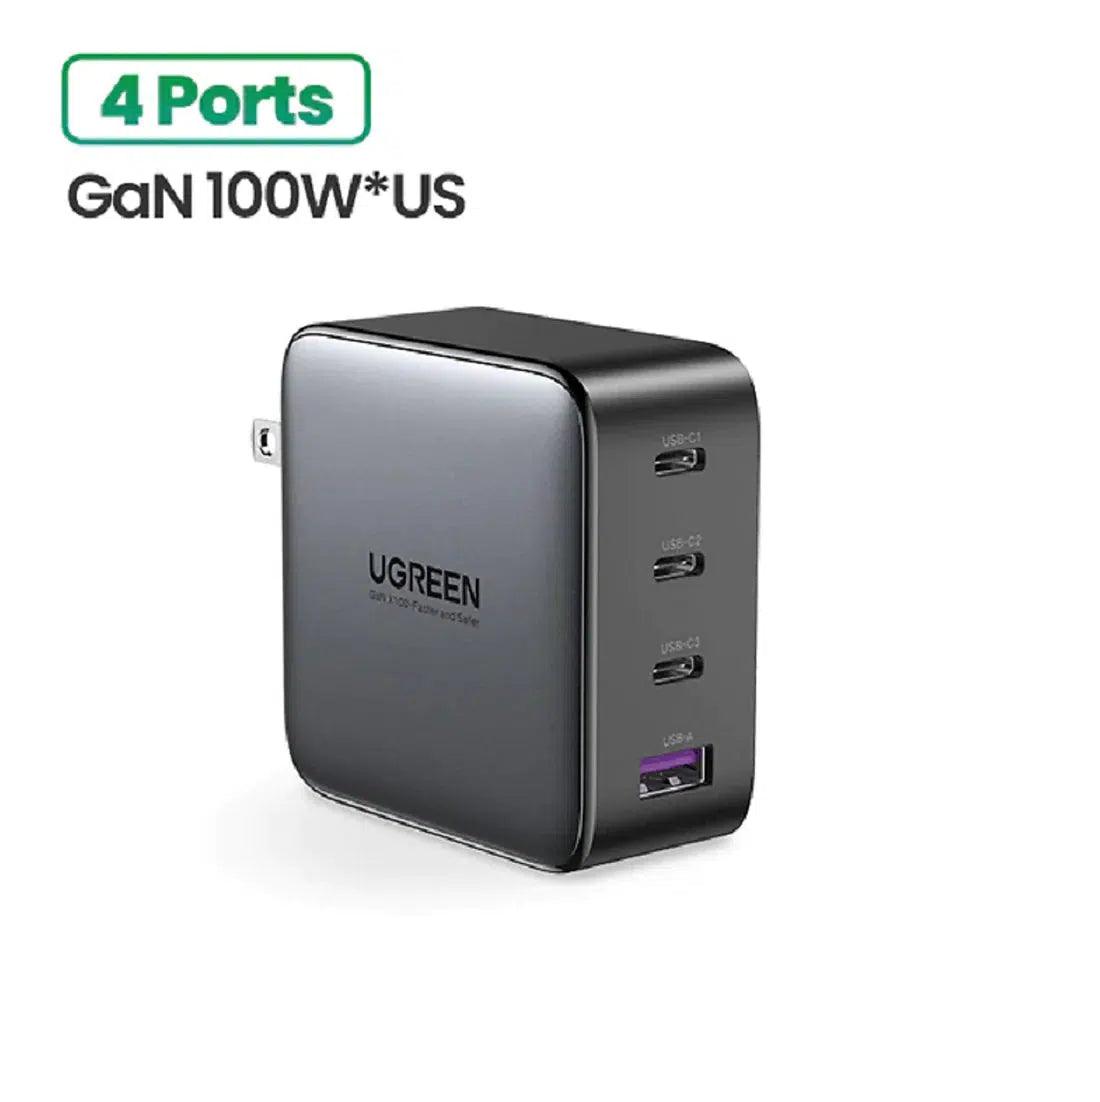 UGREEN 100W USB C Charger - Nexode 4-Port GaN PD Fast Wall Charger USB-C  Power